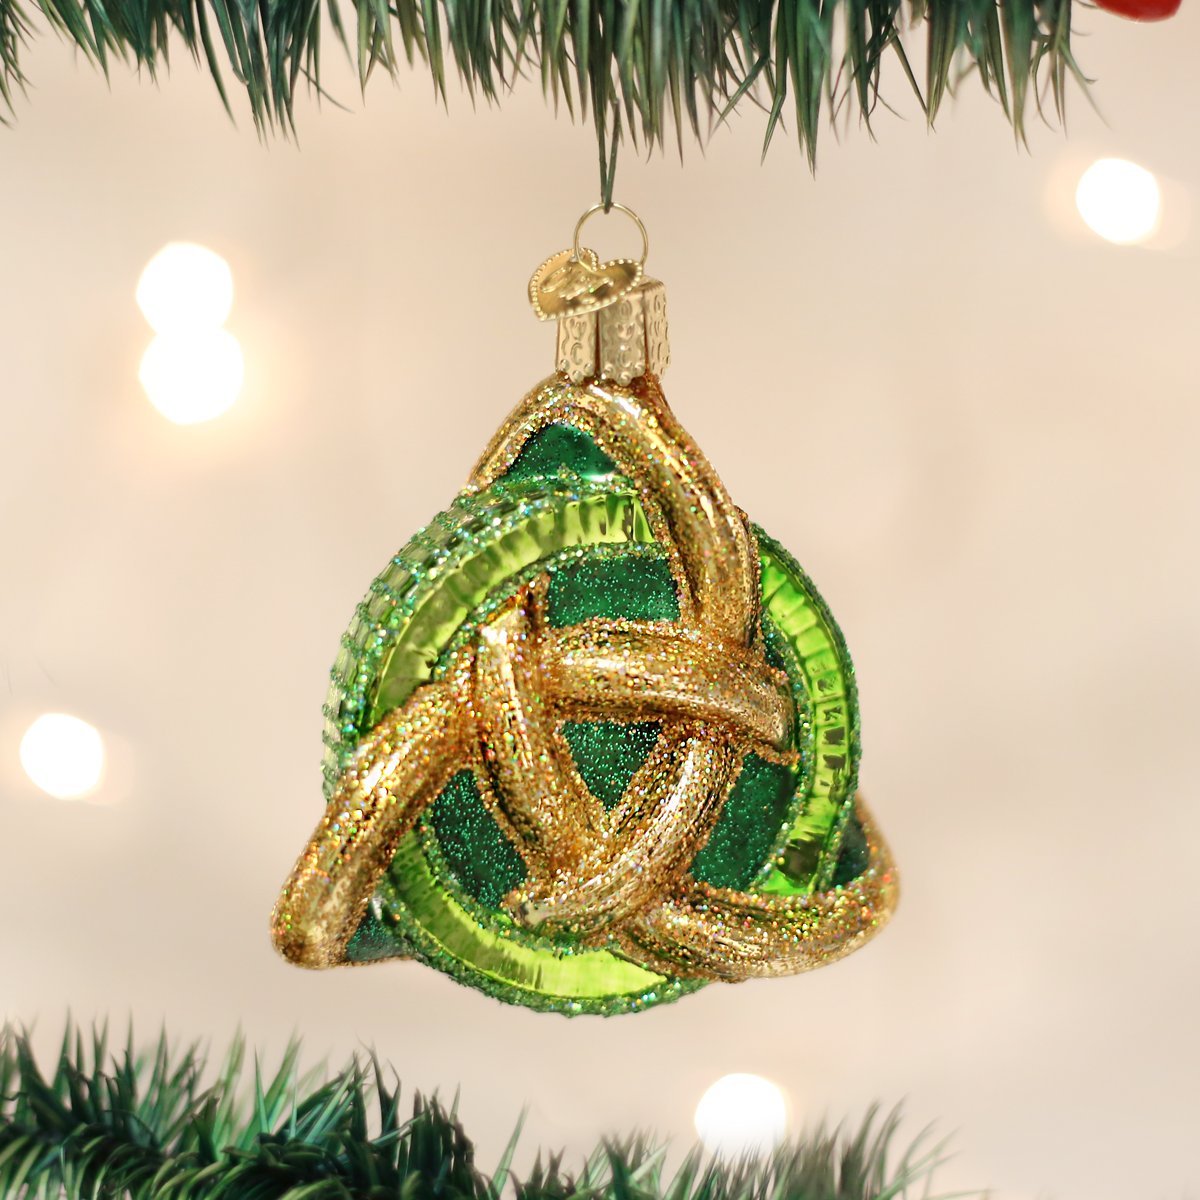 Old World Christmas Trinity Knot Ornament